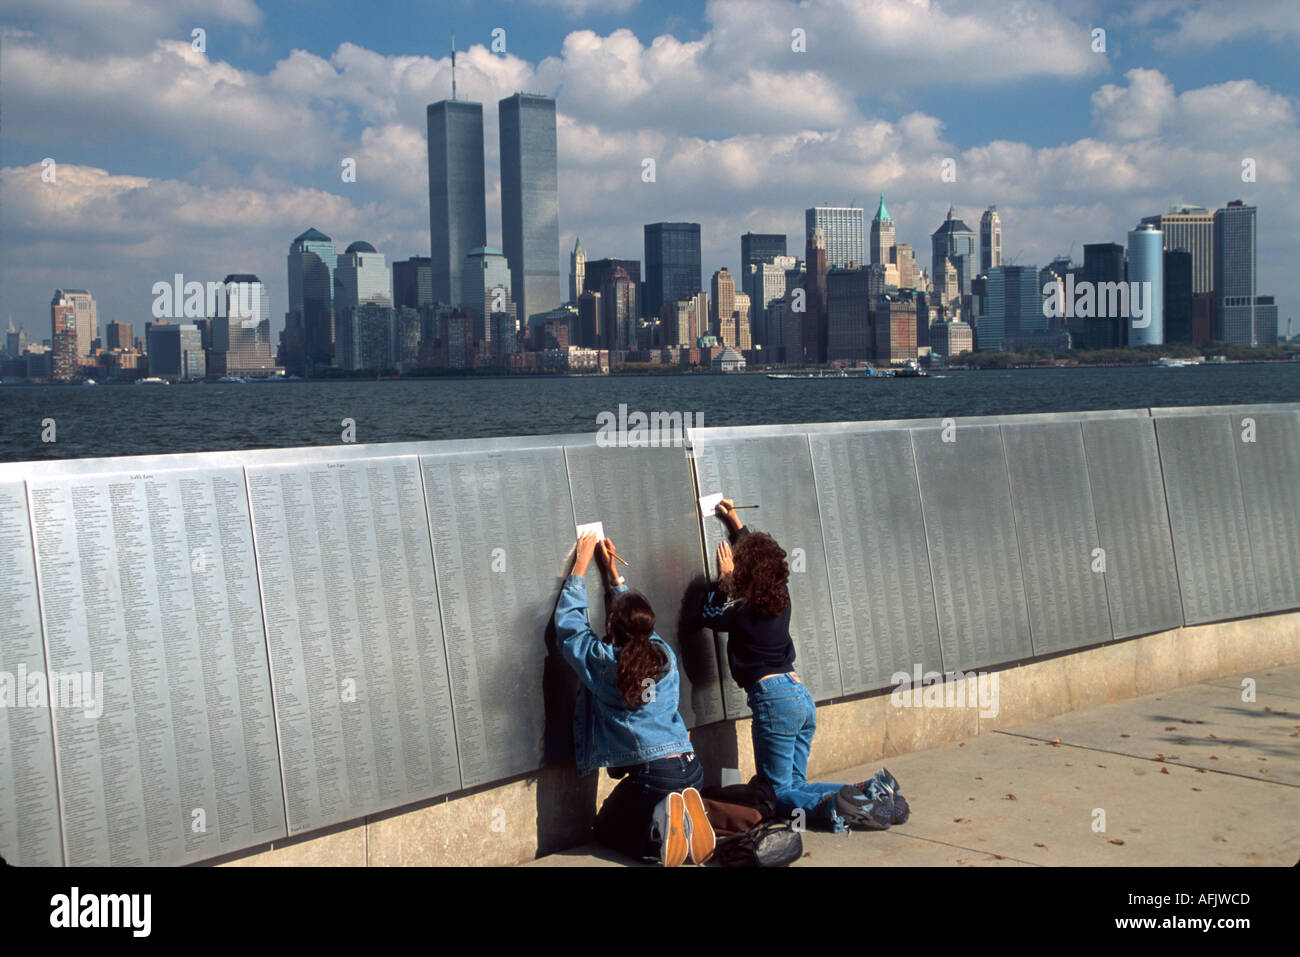 New York, Staat, New York, Stadt, Ellis Island American Immigrant Wall of  Honor World Trade Center NY105, Besucher reisen Reise Tour Tourismus lan  Stockfotografie - Alamy